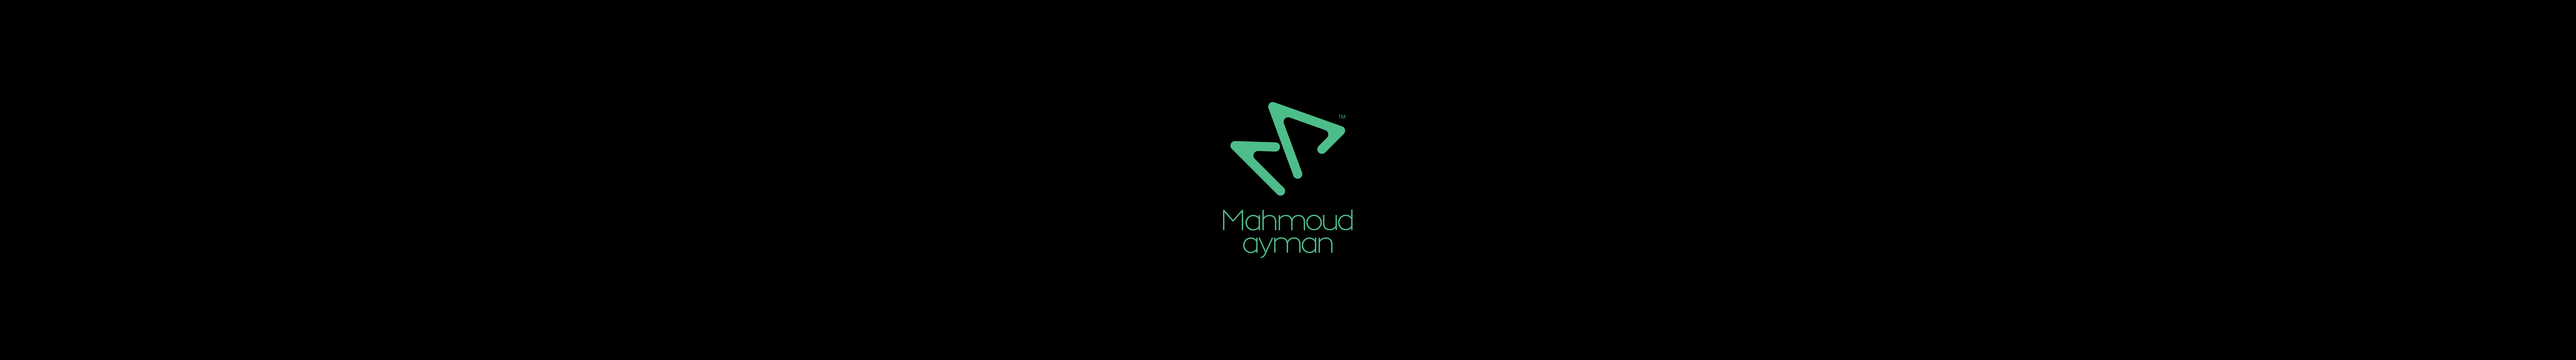 Banner de perfil de mahmoud ayman